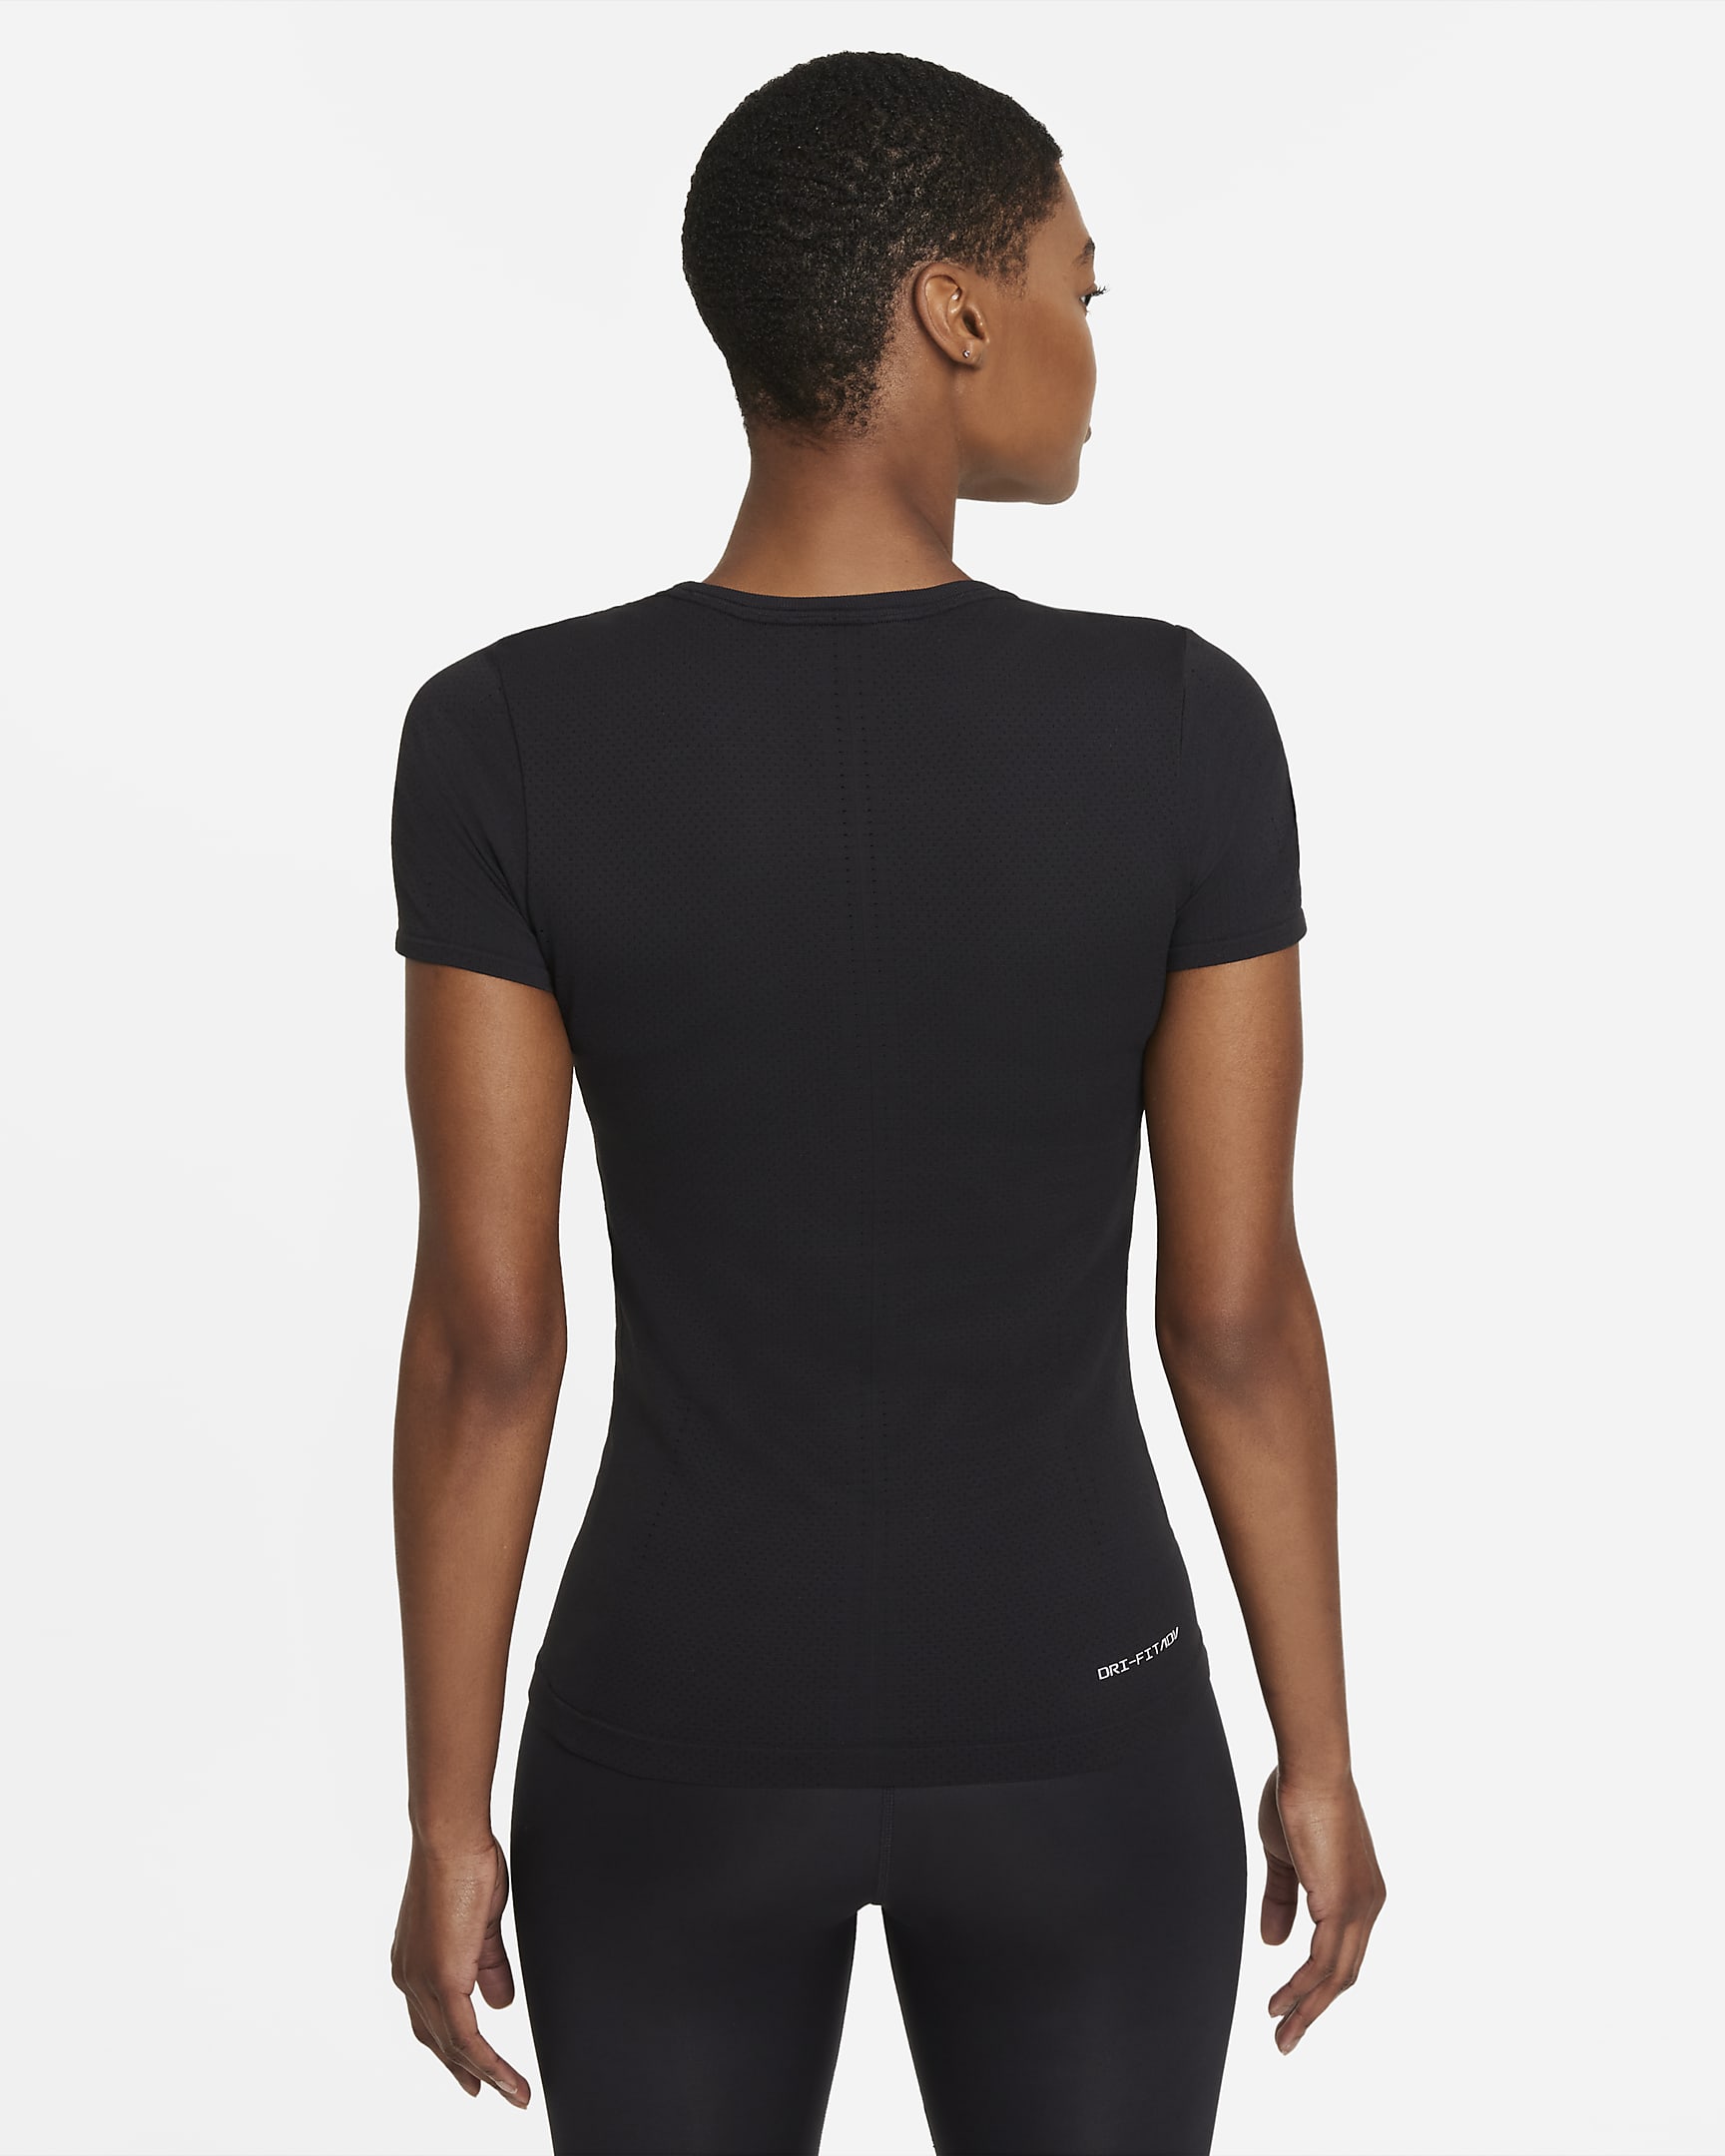 Nike Dri-FIT ADV Aura Women's Slim-Fit Short-Sleeve Top. Nike HR